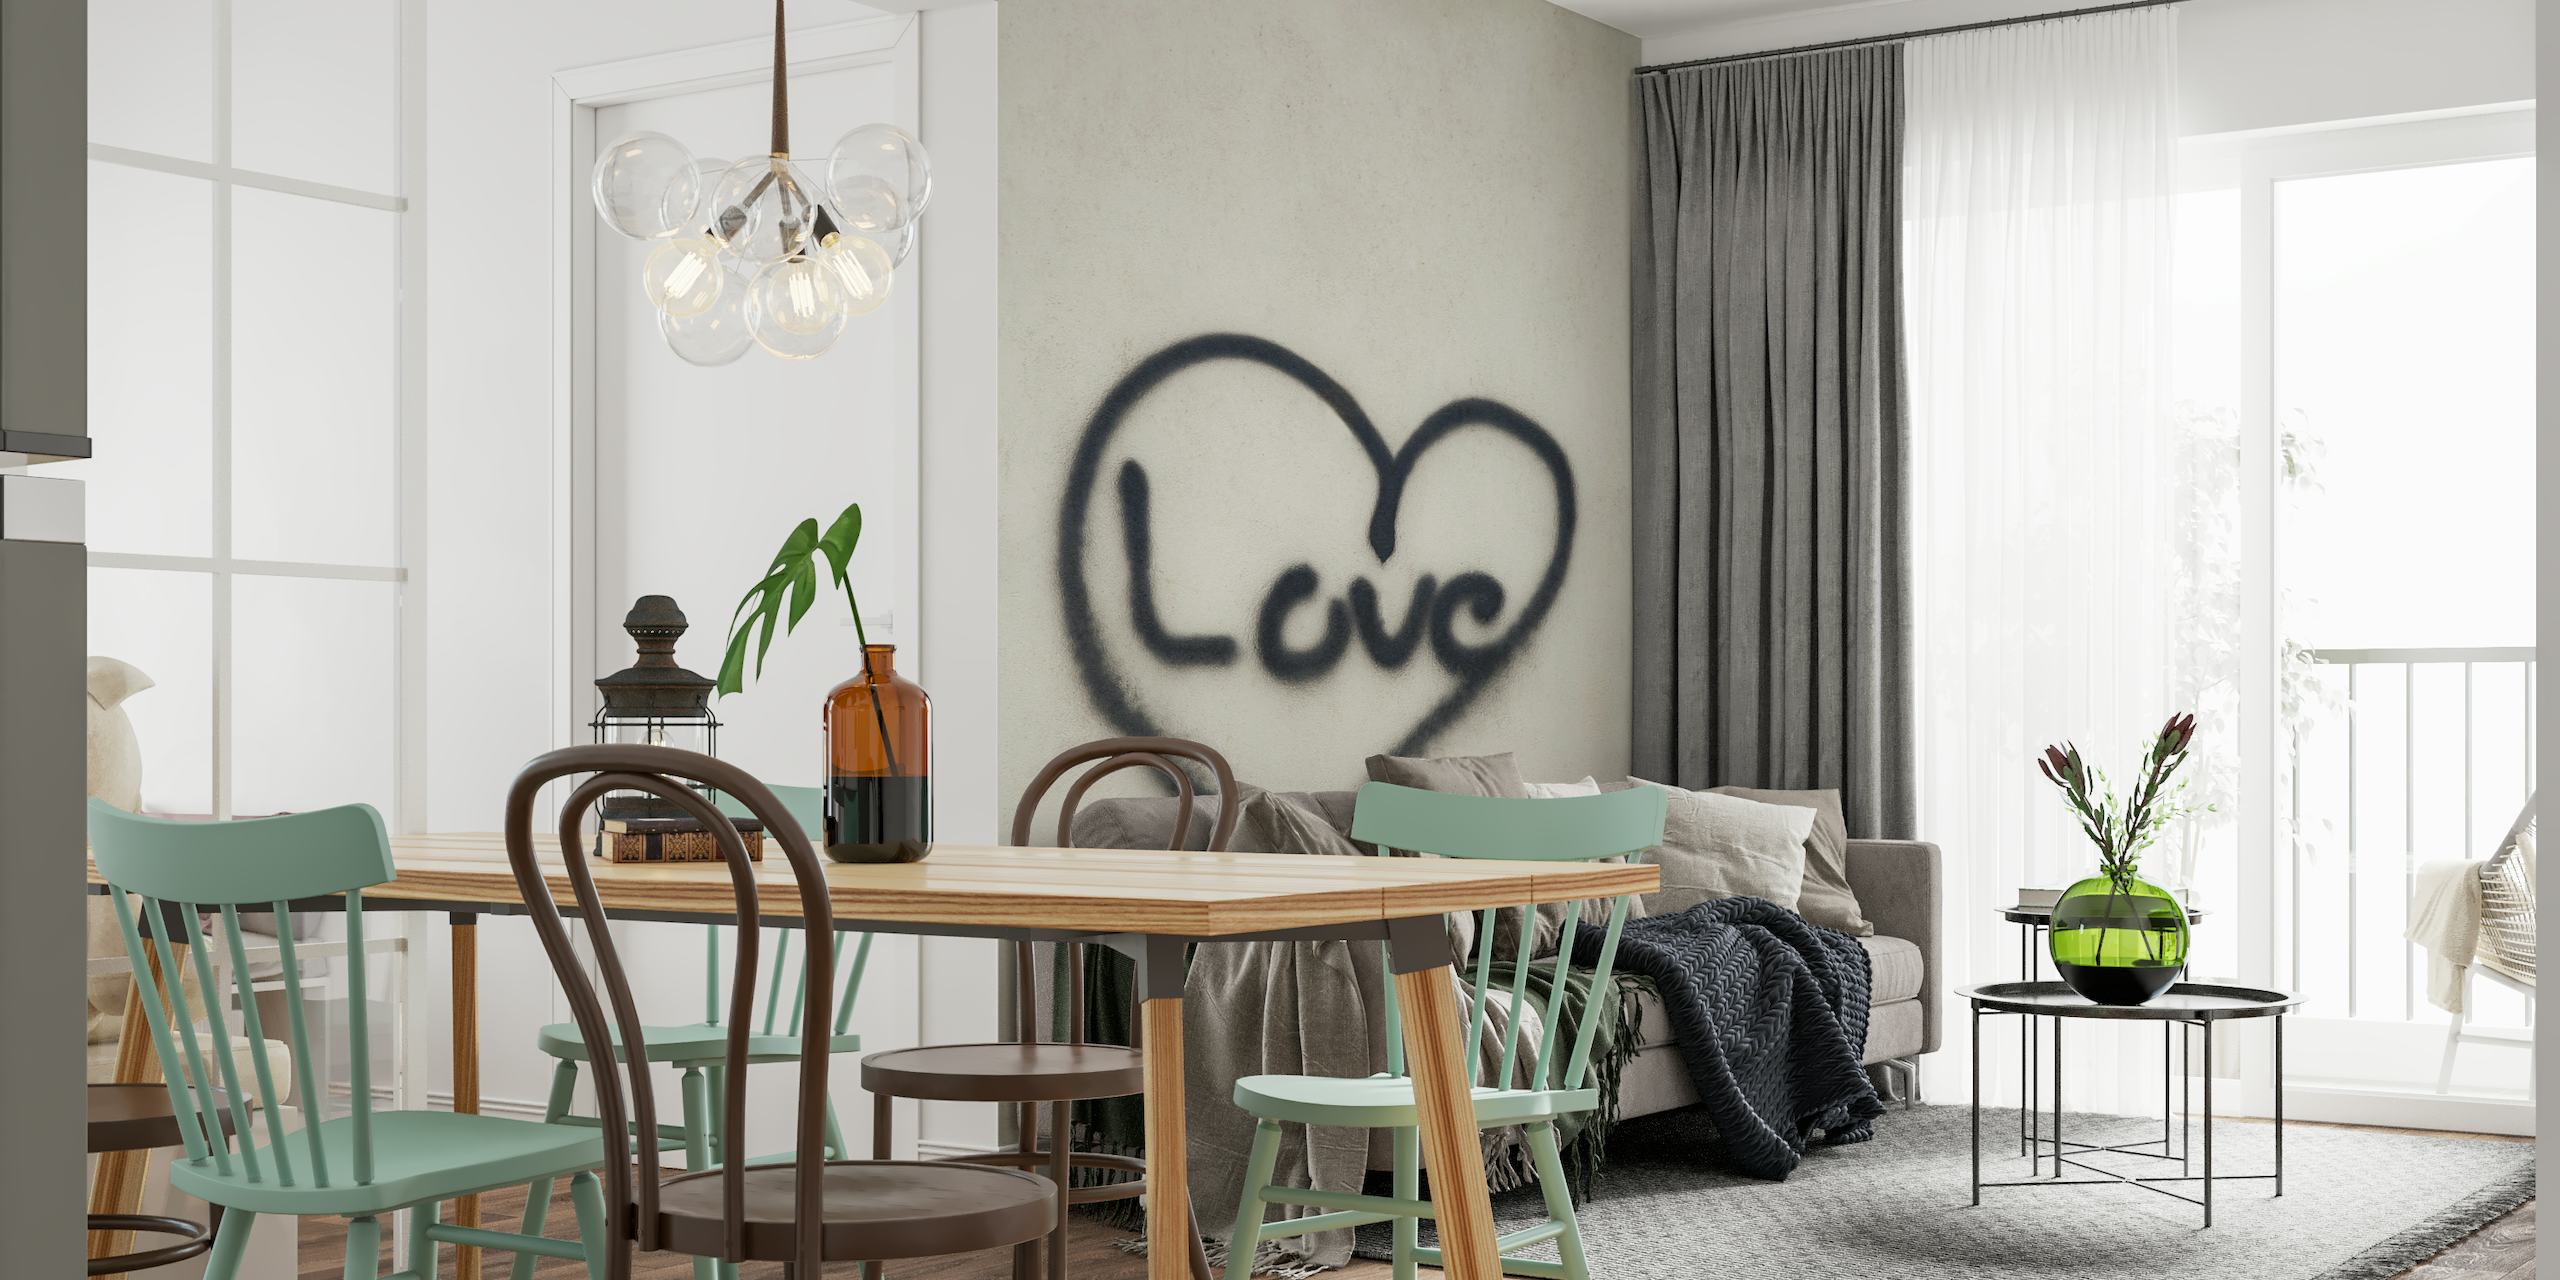 Love Heart wallpaper